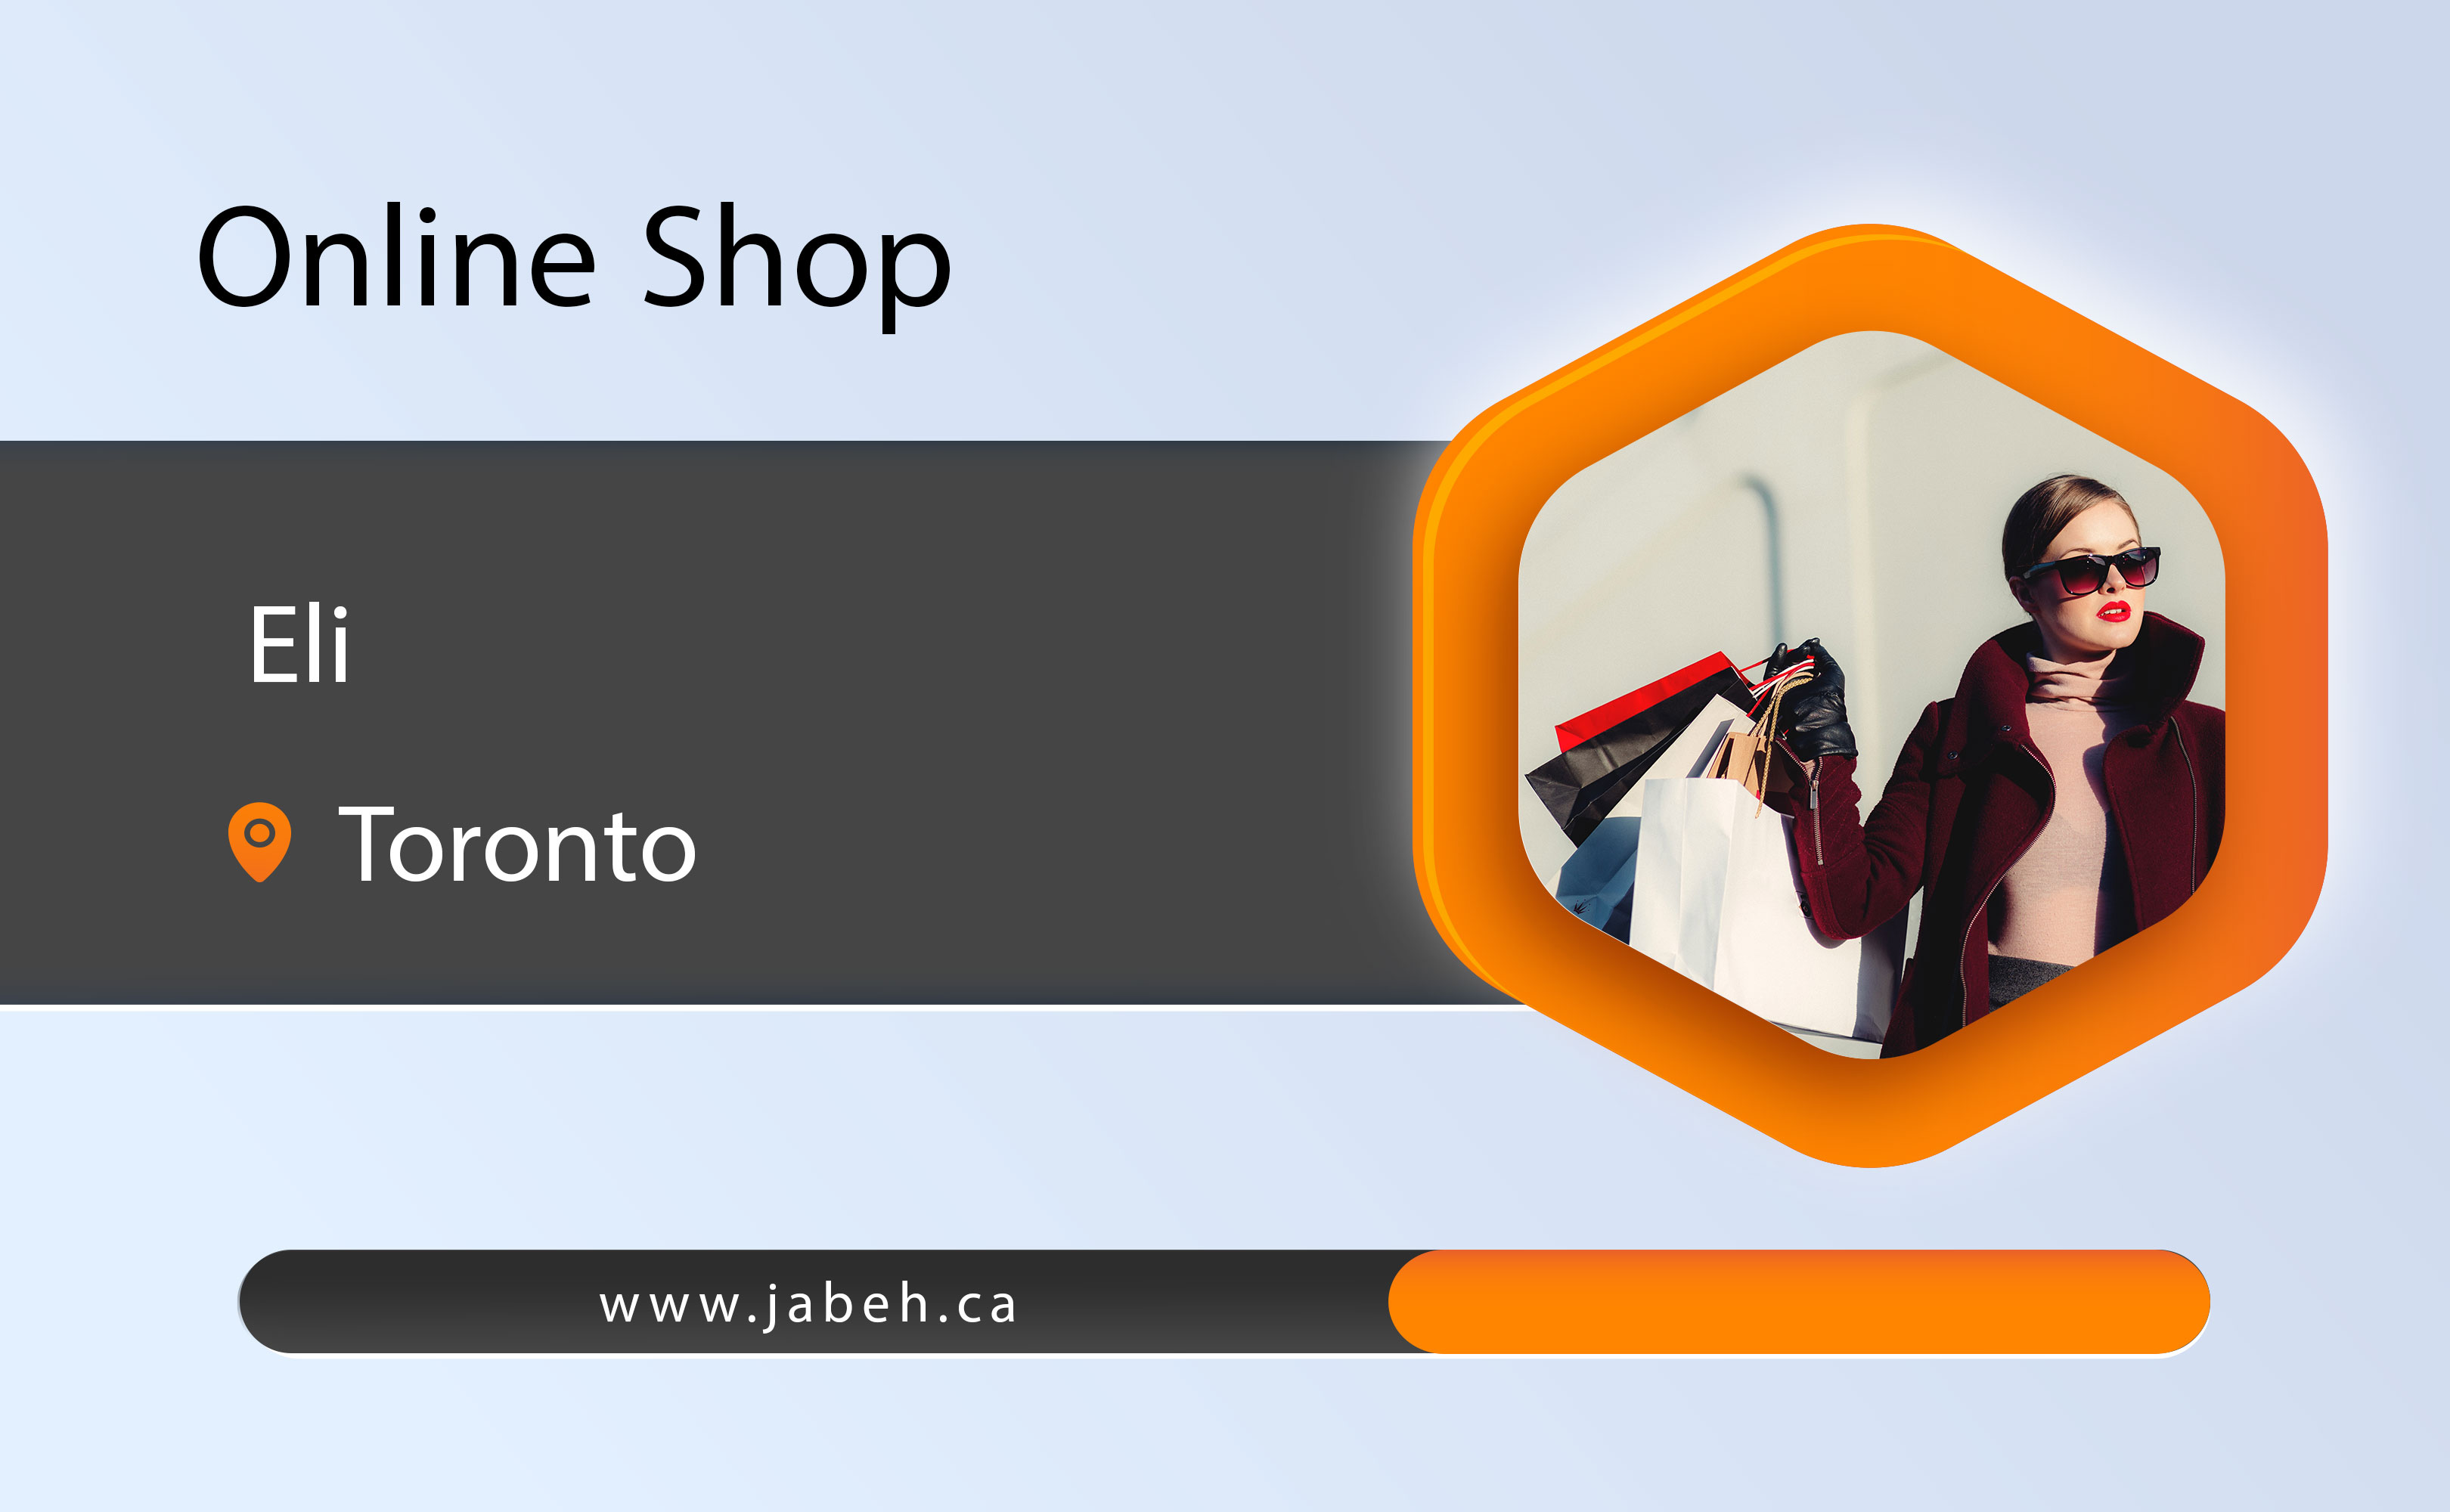 Eli online store in Toronto